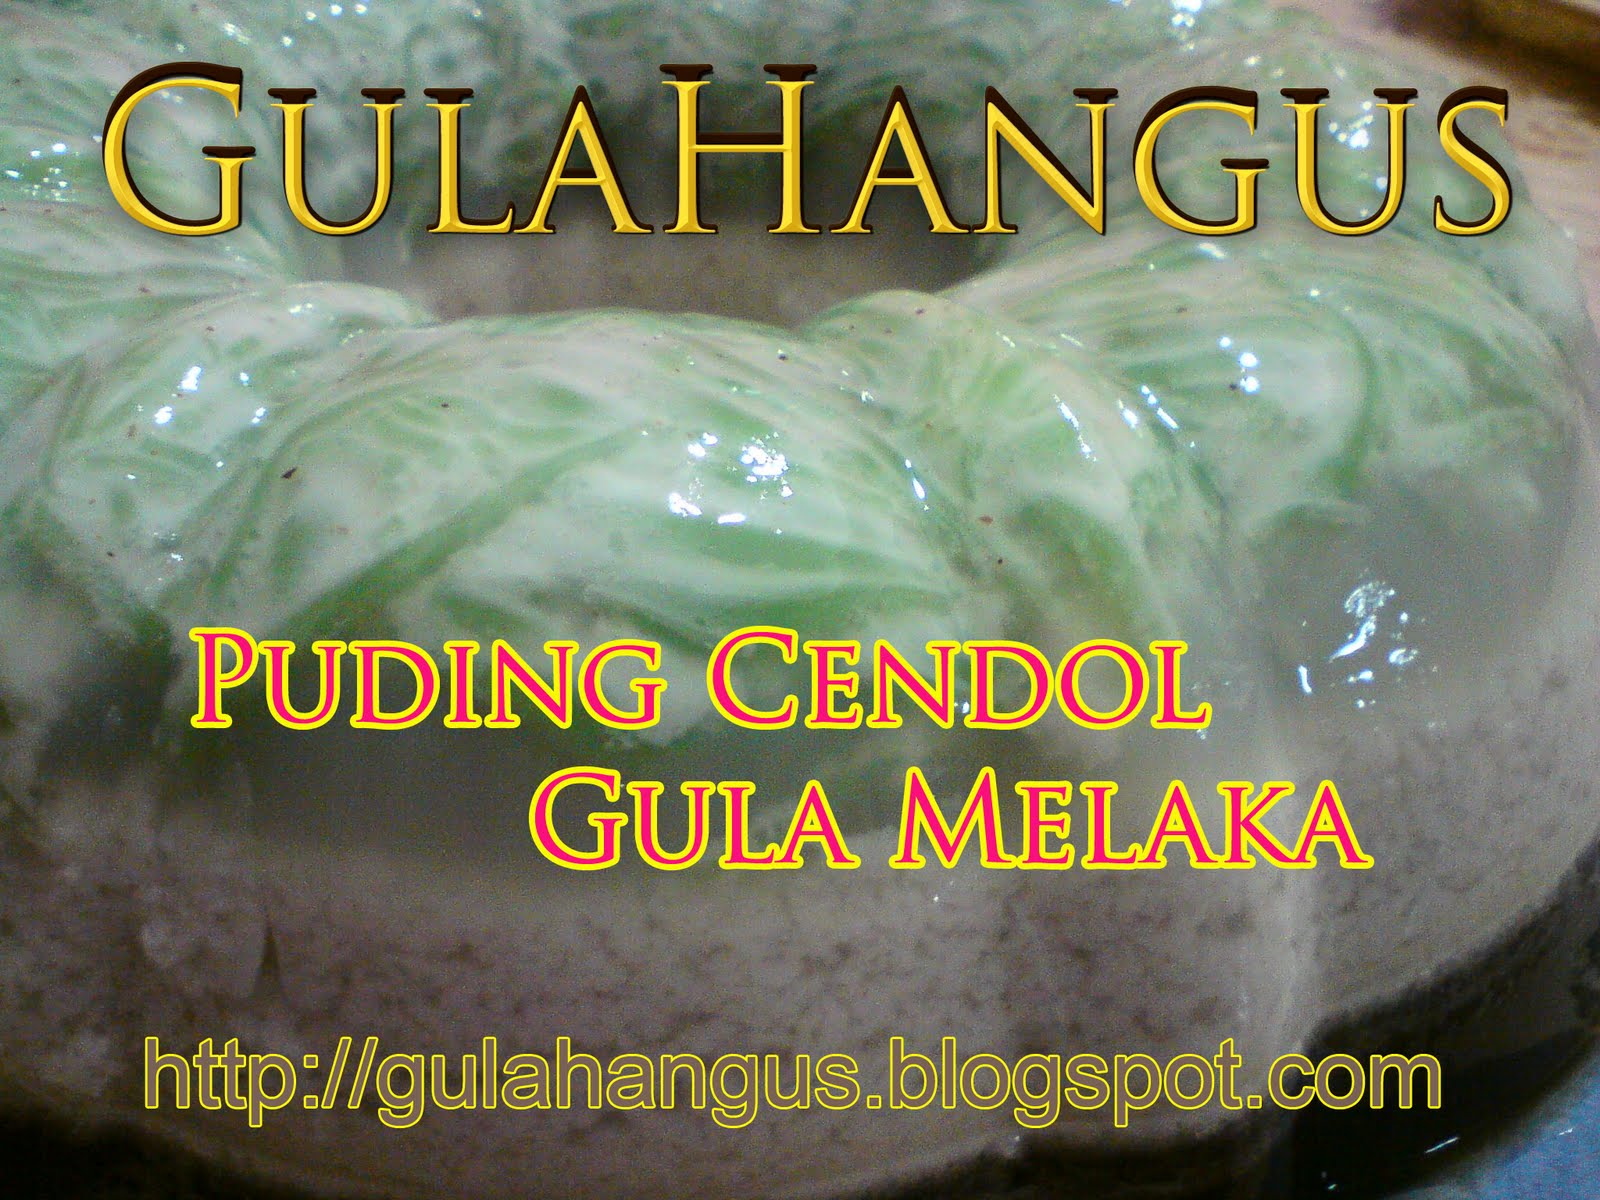 Gula Hangus ( 002177897 - D ): Resepi Puding Cendol Gula 